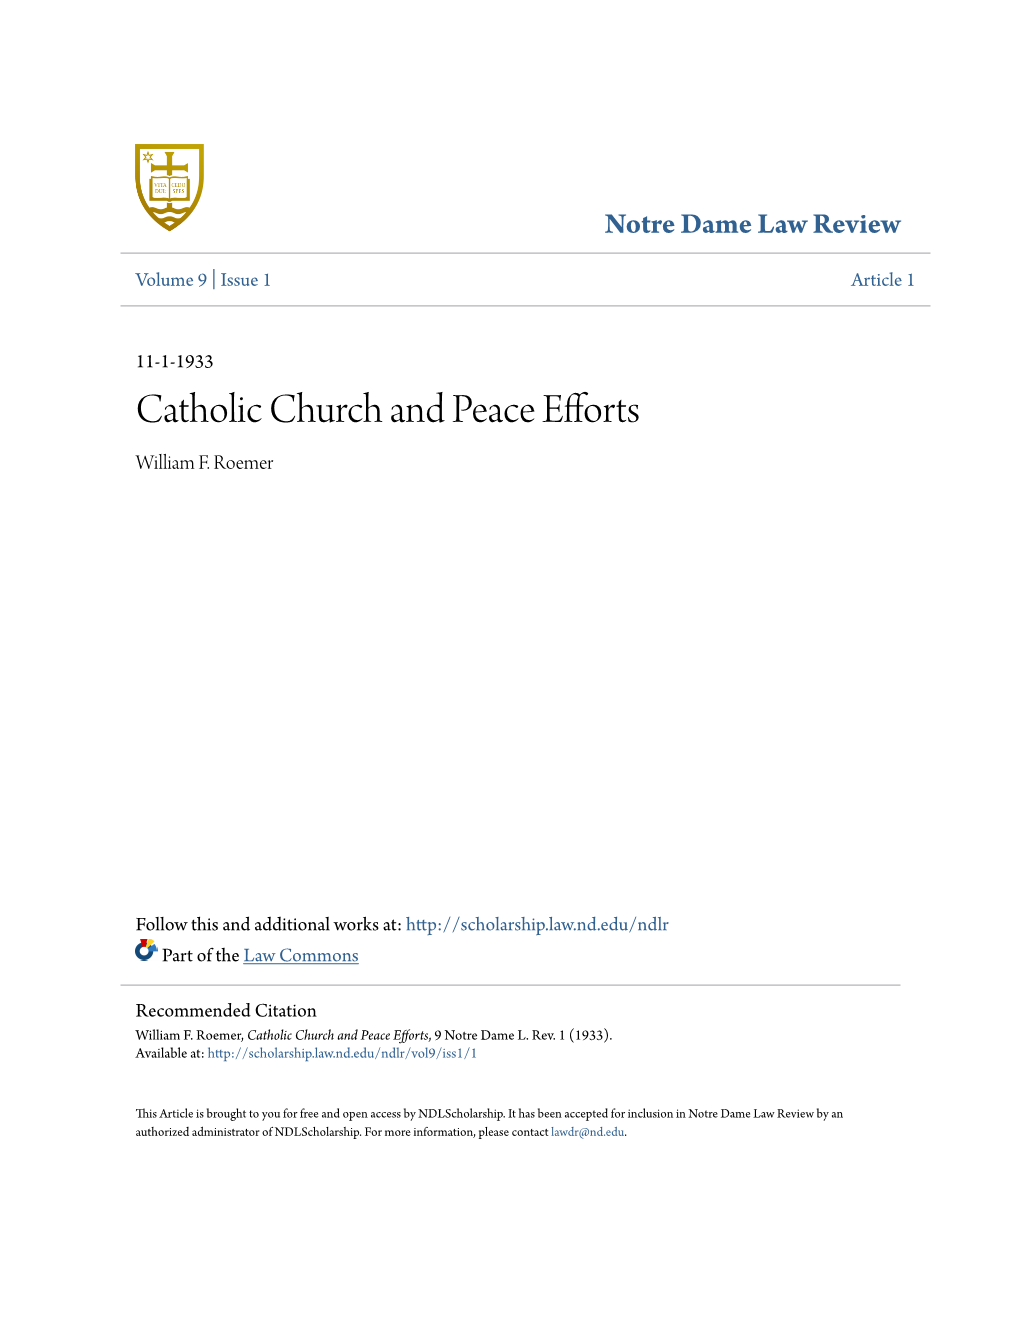 Catholic Church and Peace Efforts William F